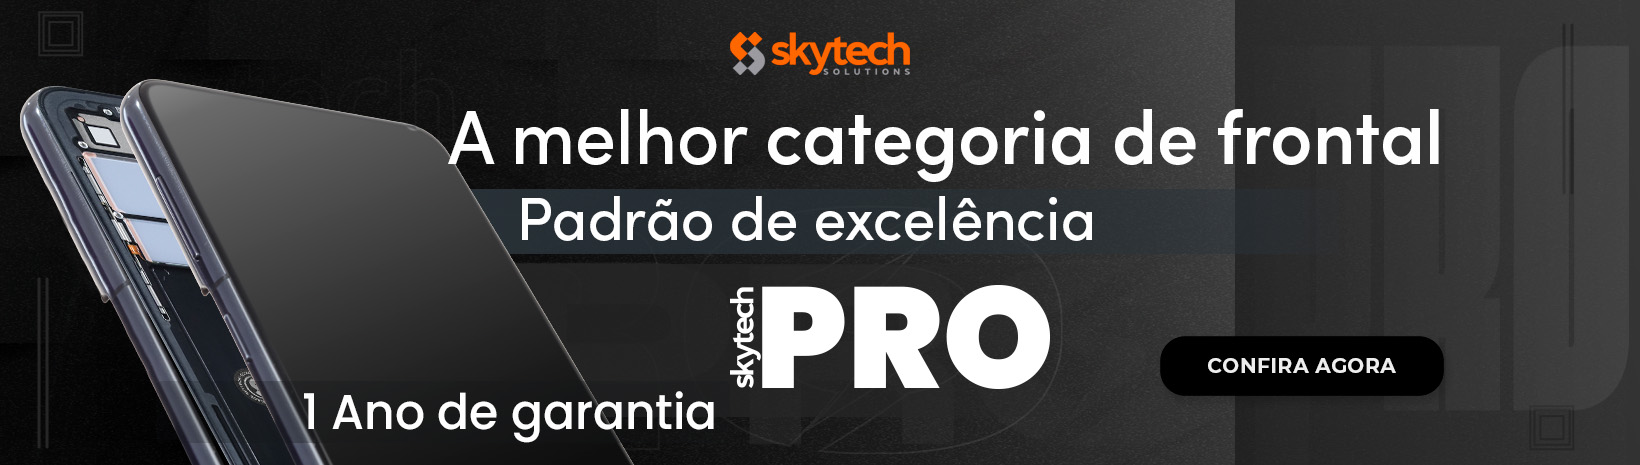 SkytechPro@Desktop